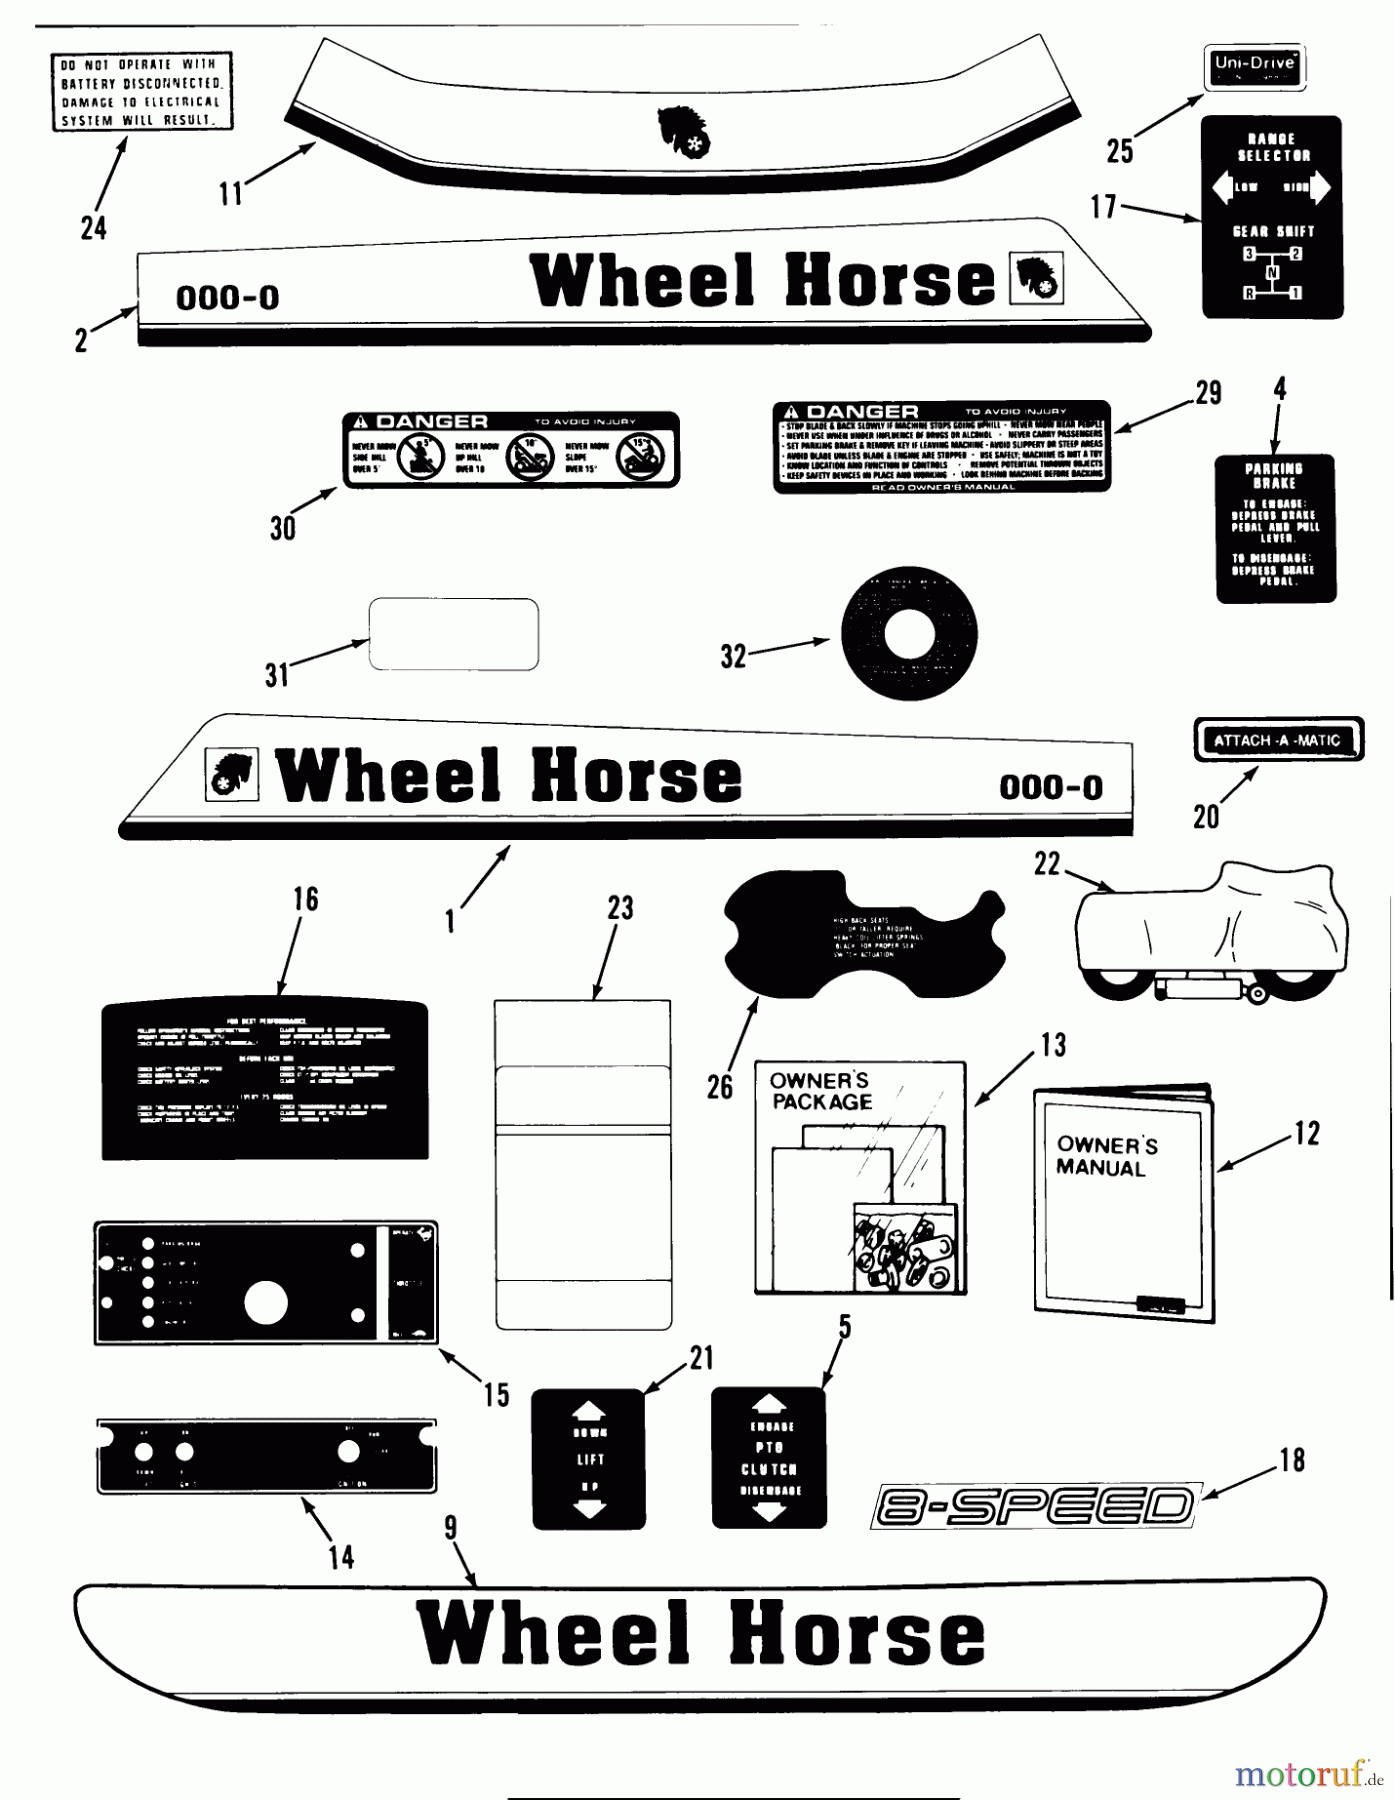  Toro Neu Mowers, Lawn & Garden Tractor Seite 1 31-16O801 (416-8) - Toro 416-8 Garden Tractor, 1989 DECALS